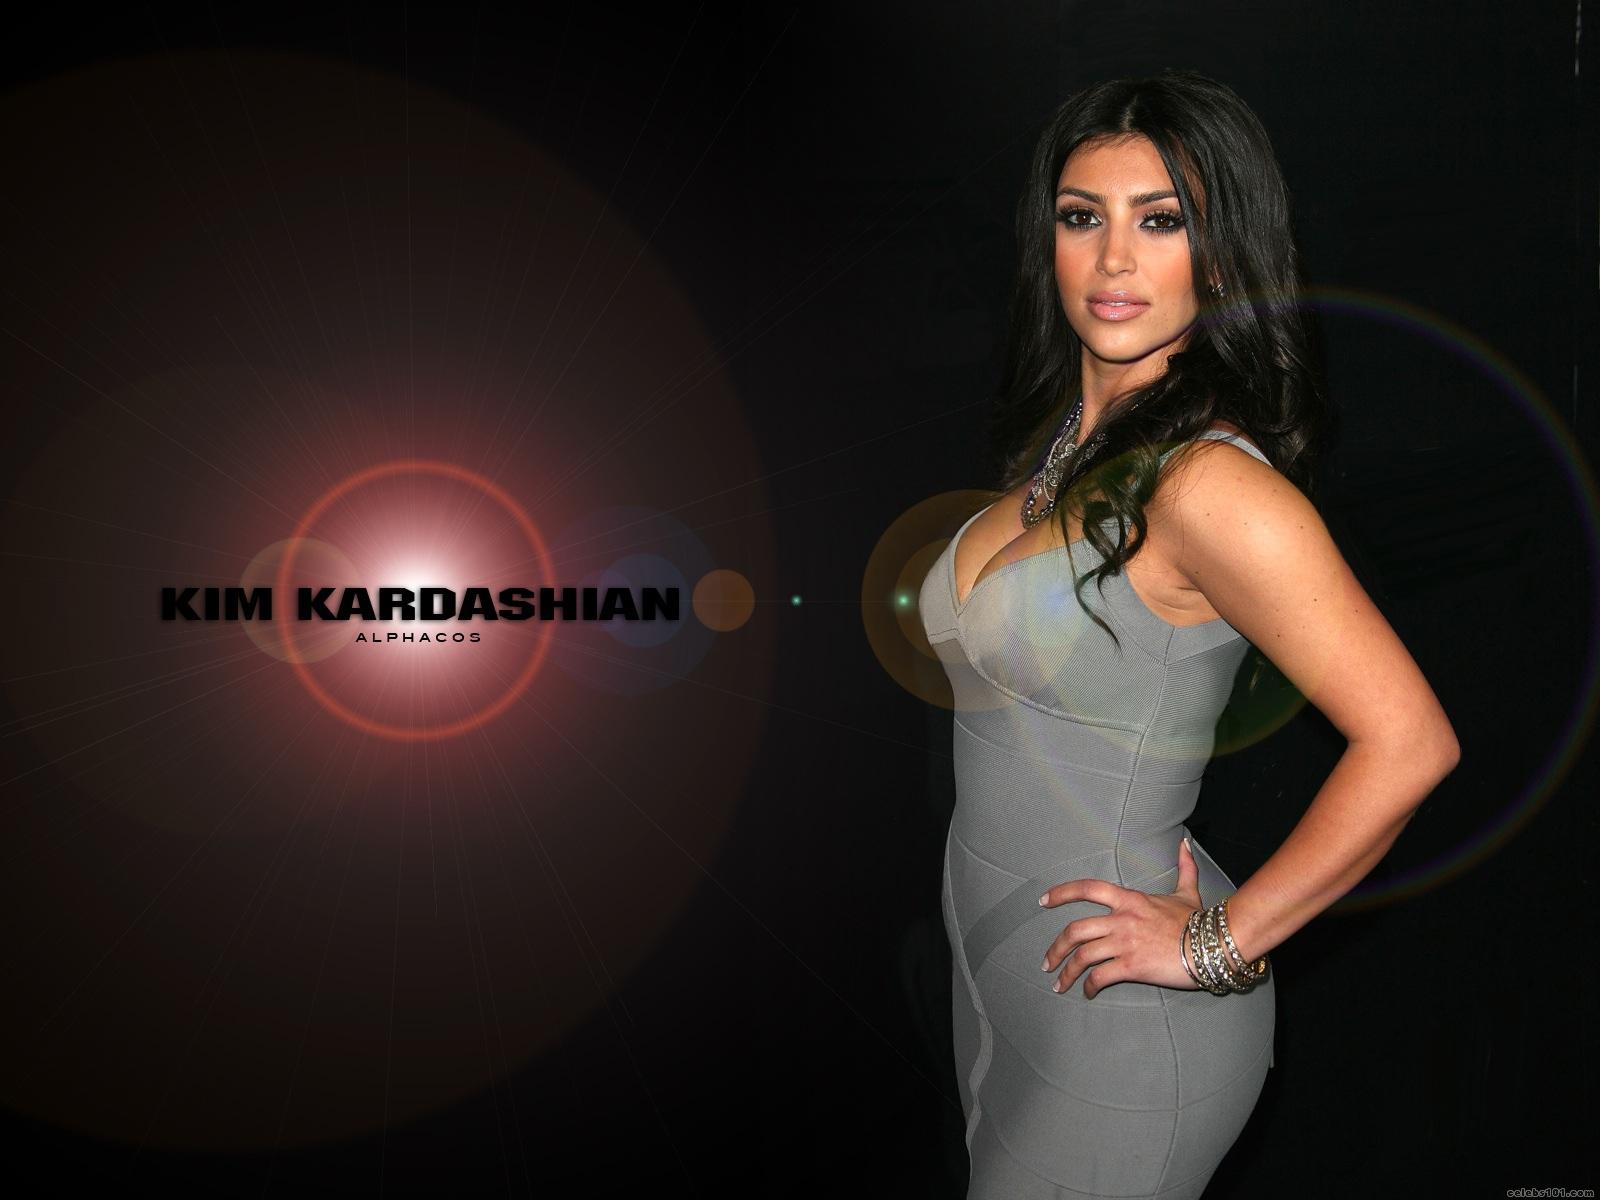 Kim Kardashian wallpapers Kim Kardashian pictures Kim Kardashian pics Kim Kardashian photos Kim Kardashian posters Kim Kardashian images Kim Kardashian biography Kim Kardashian galleries